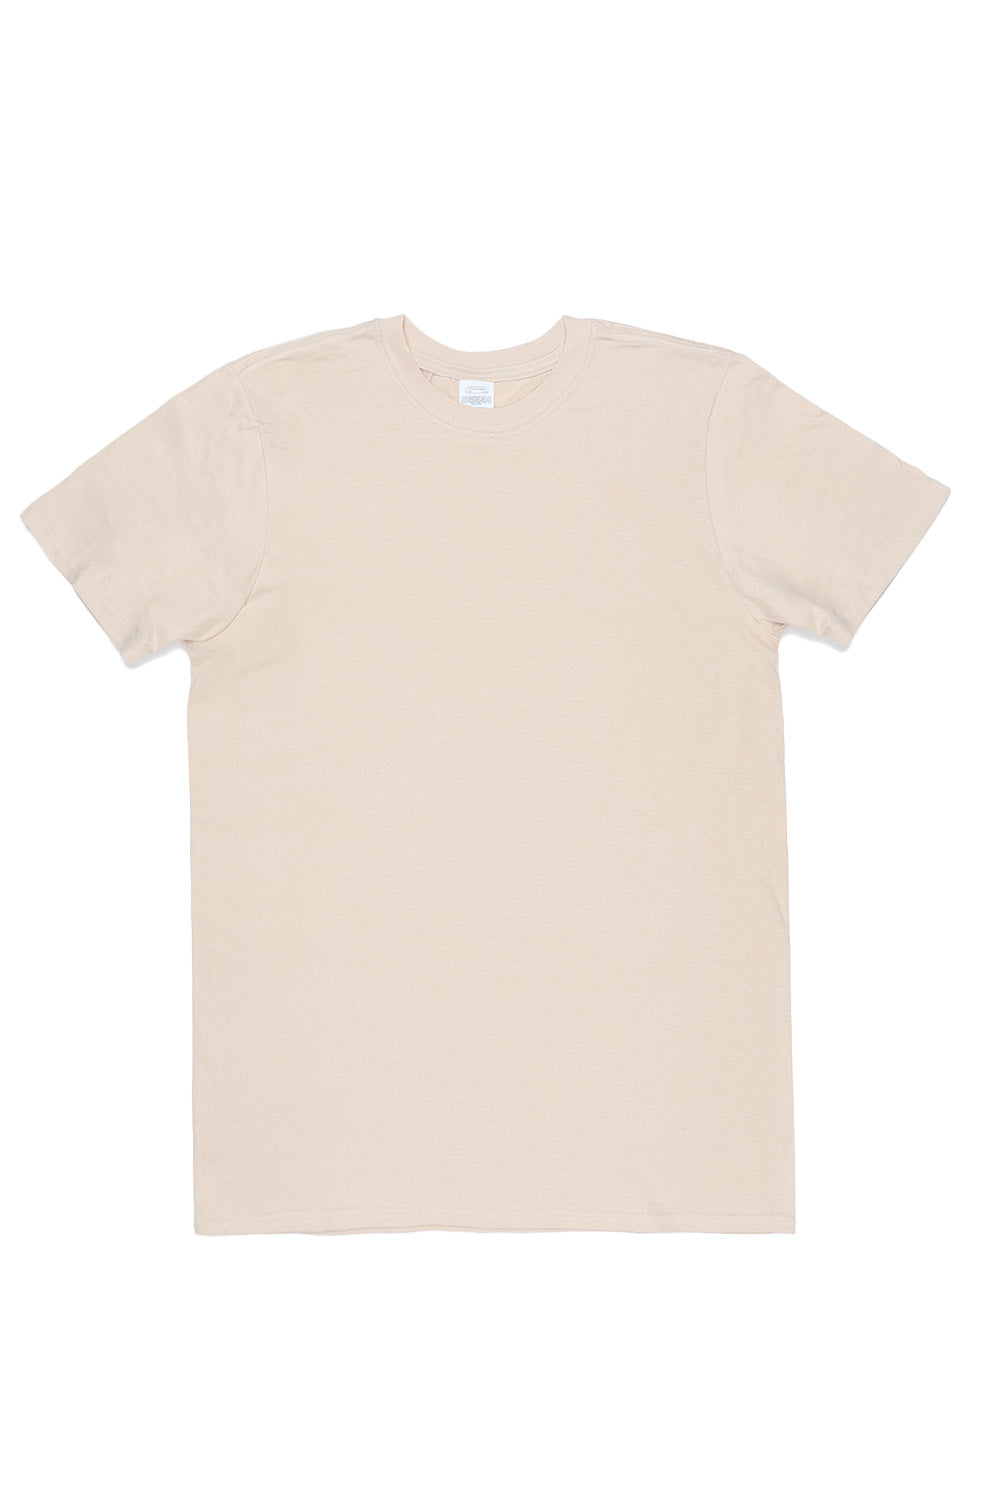 Unisex Softstyle Custom Printed T-Shirt